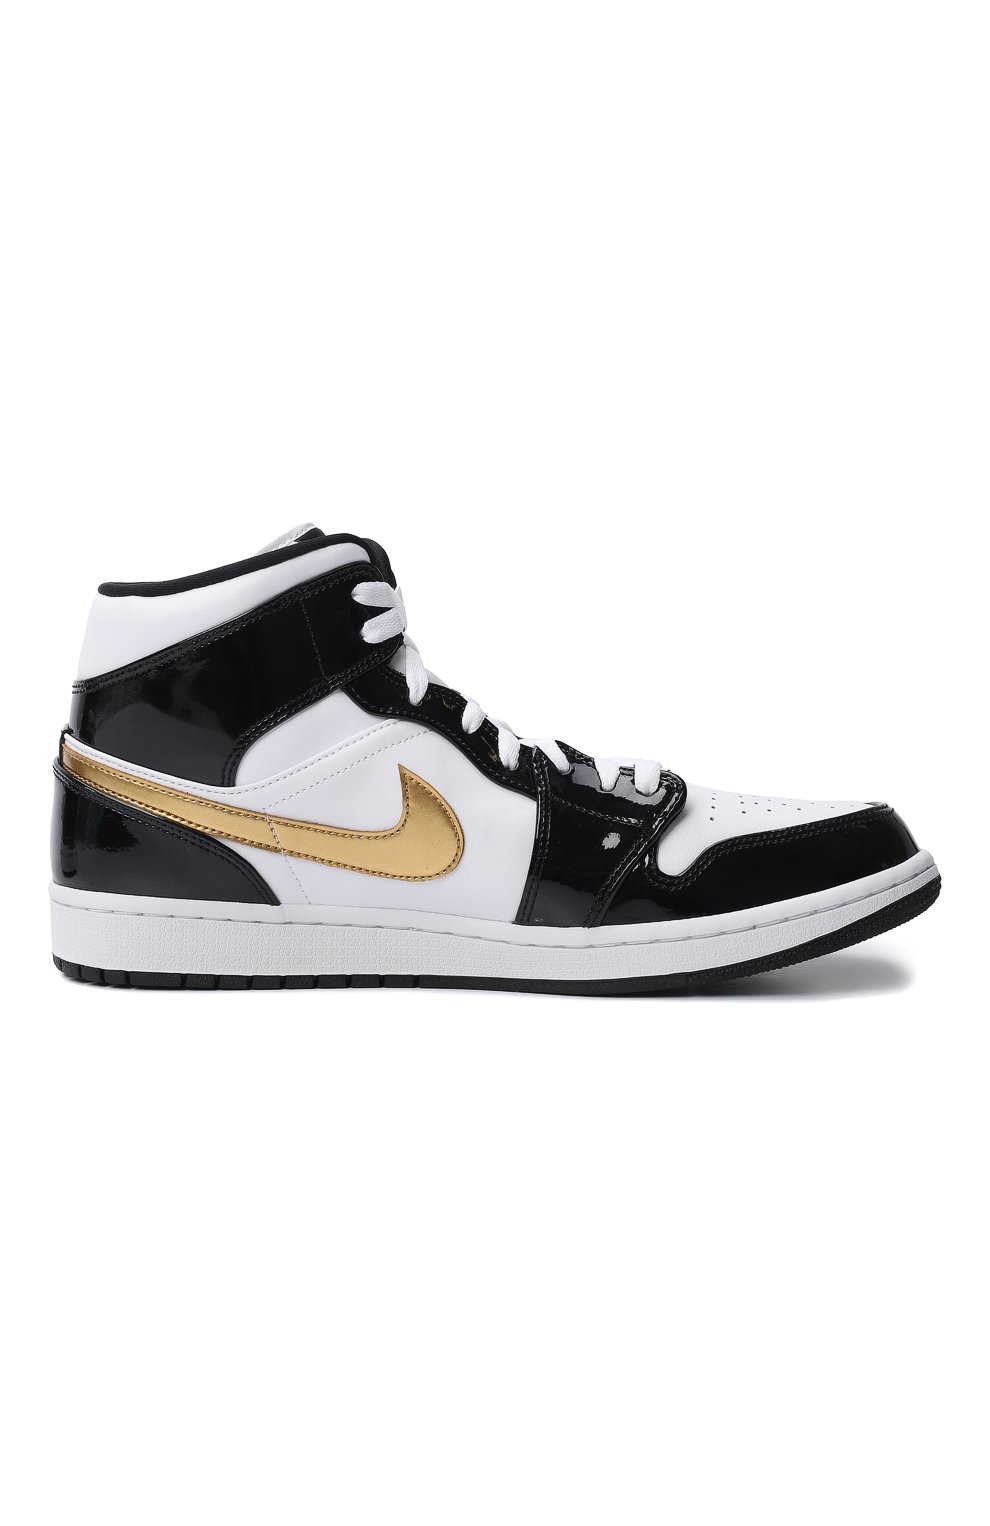 Кеды Air Jordan 1 Mid Patent Black White Gold | Nike | Чёрно-белый - 5